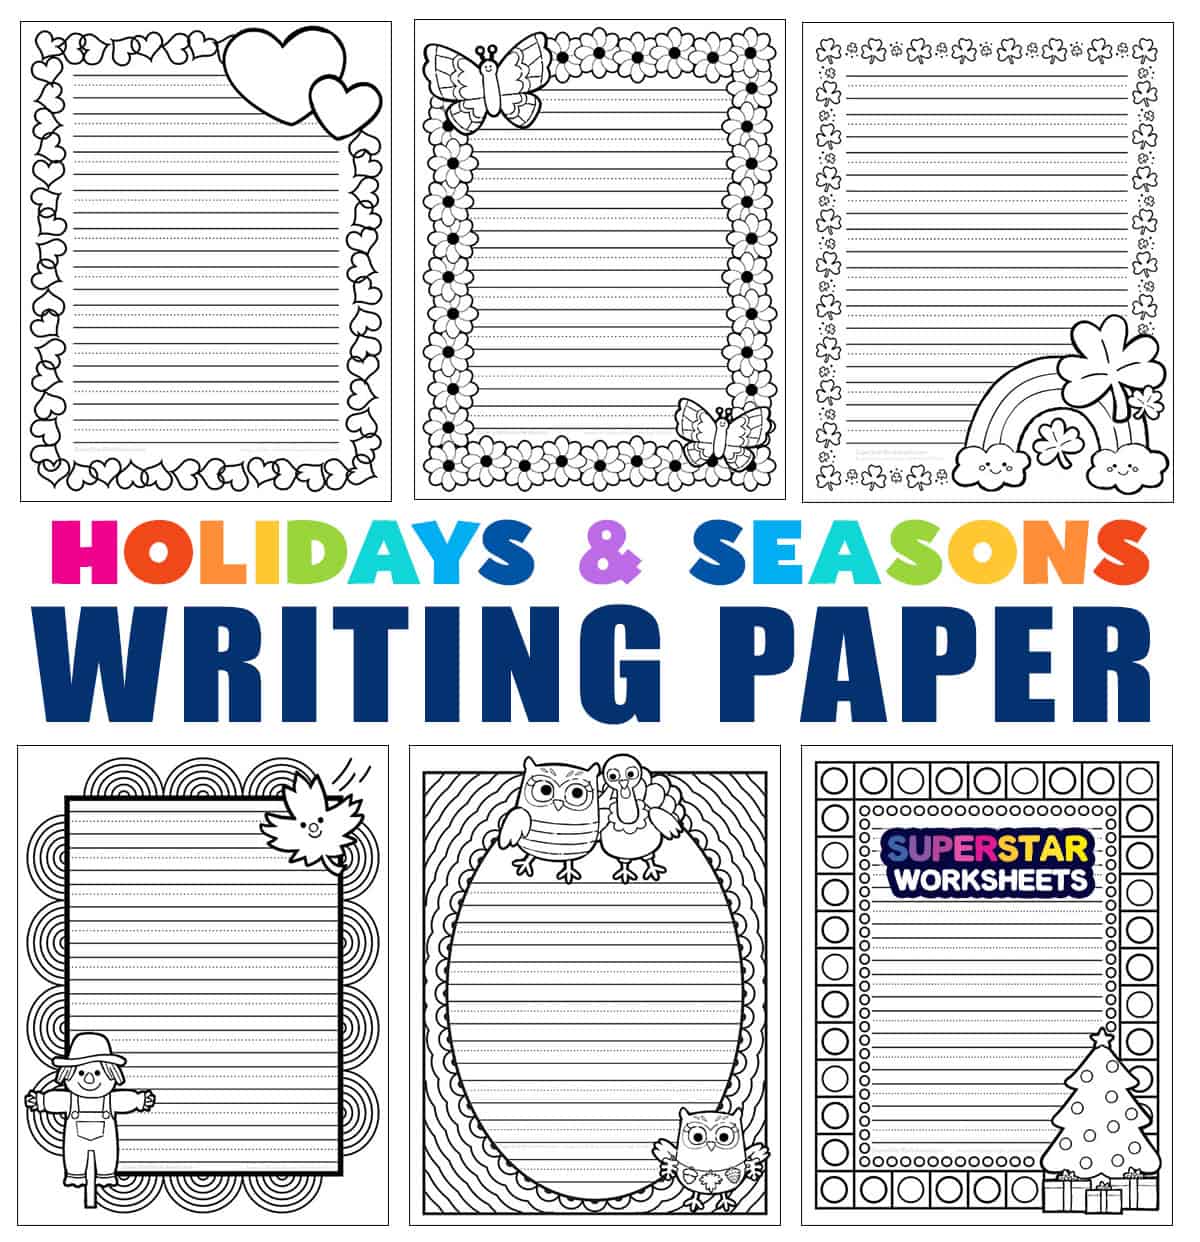 writing paper kindergarten free